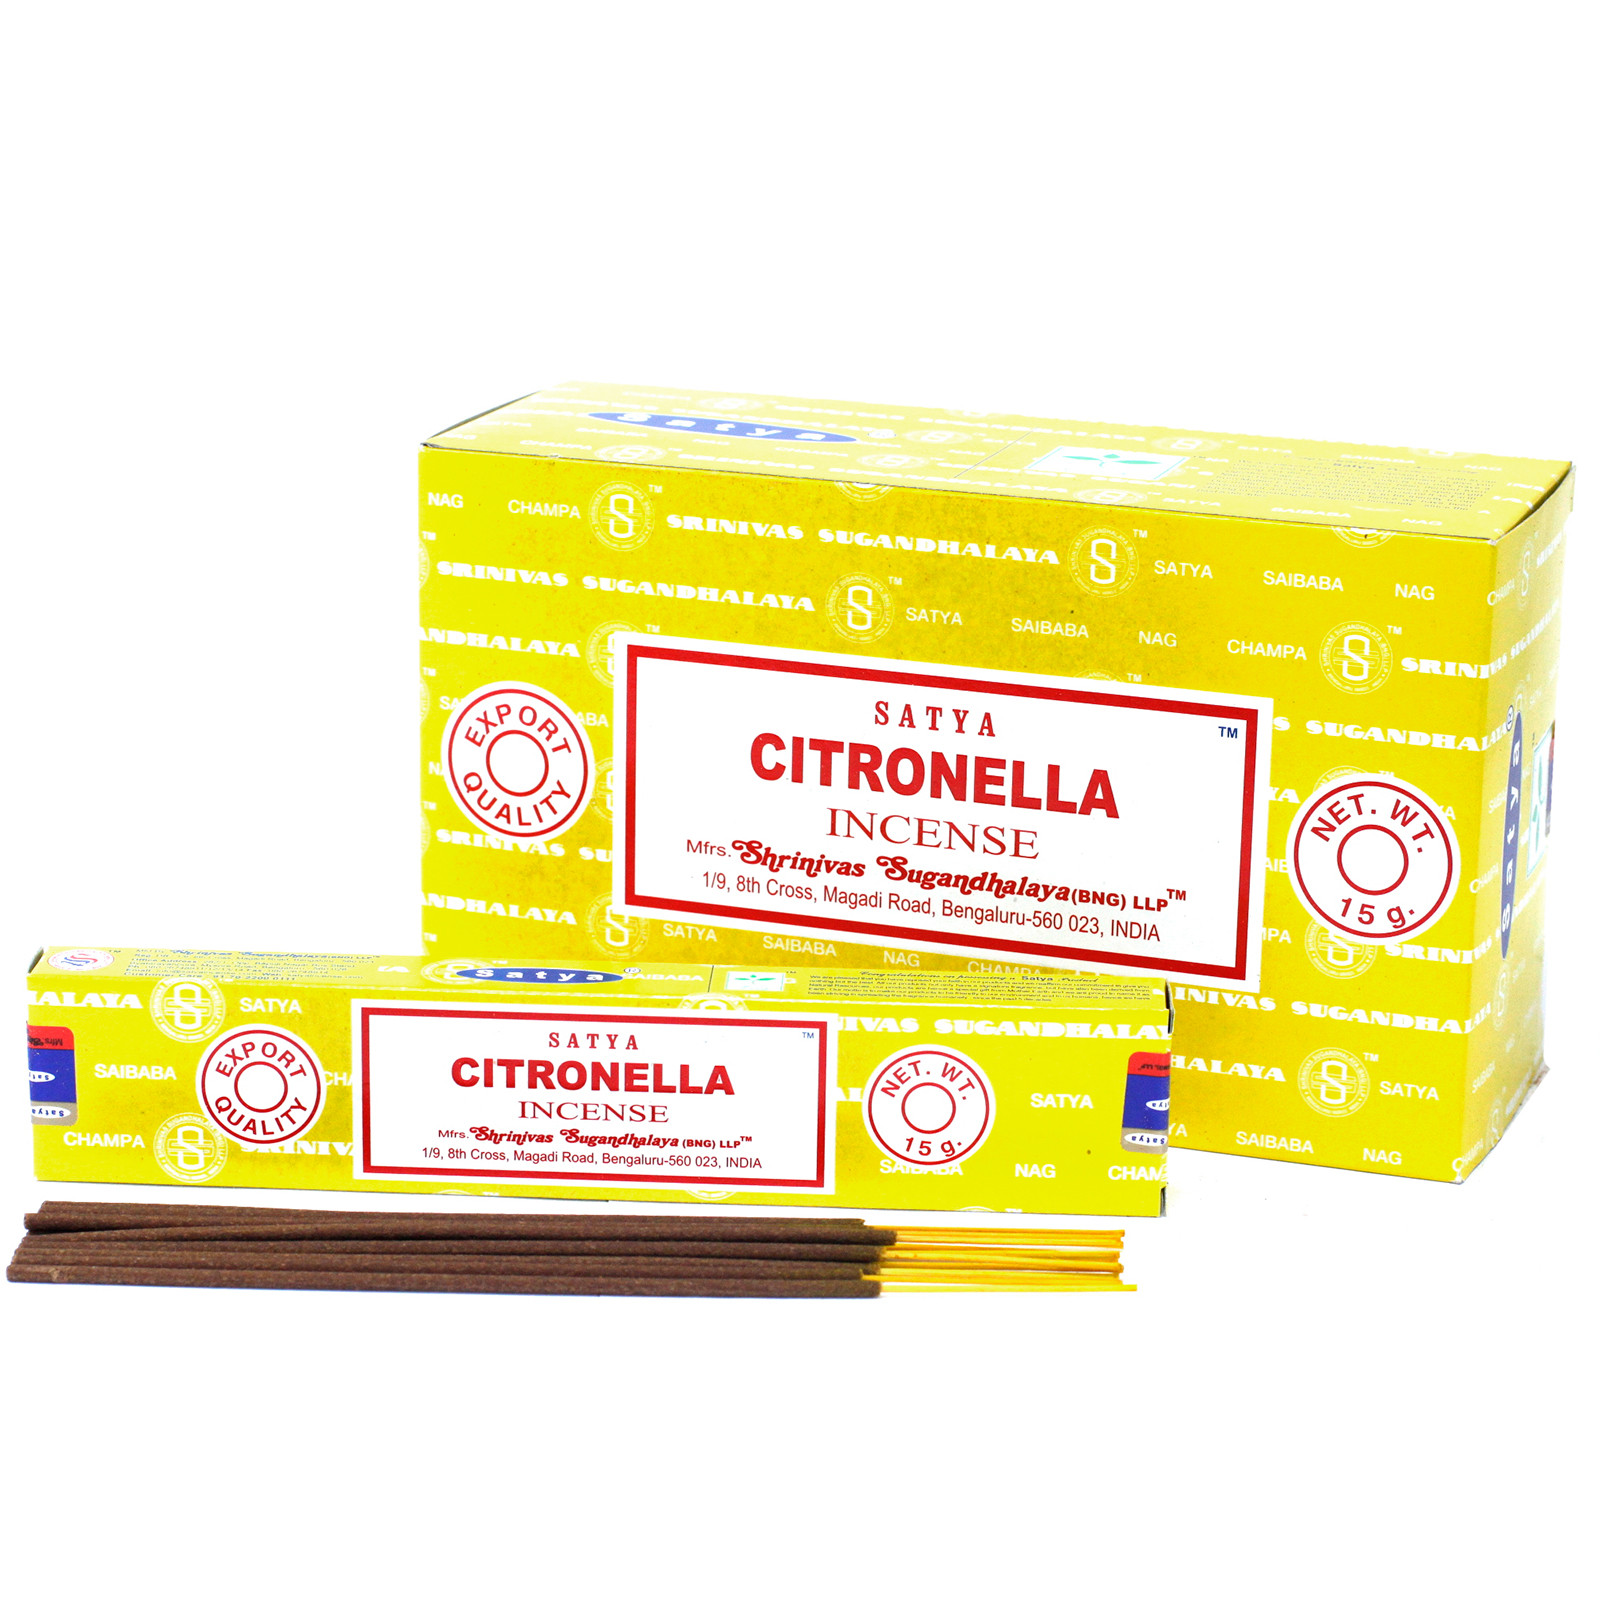 3 x 15g Packs Satya Incense Sticks - Citronella - Click Image to Close